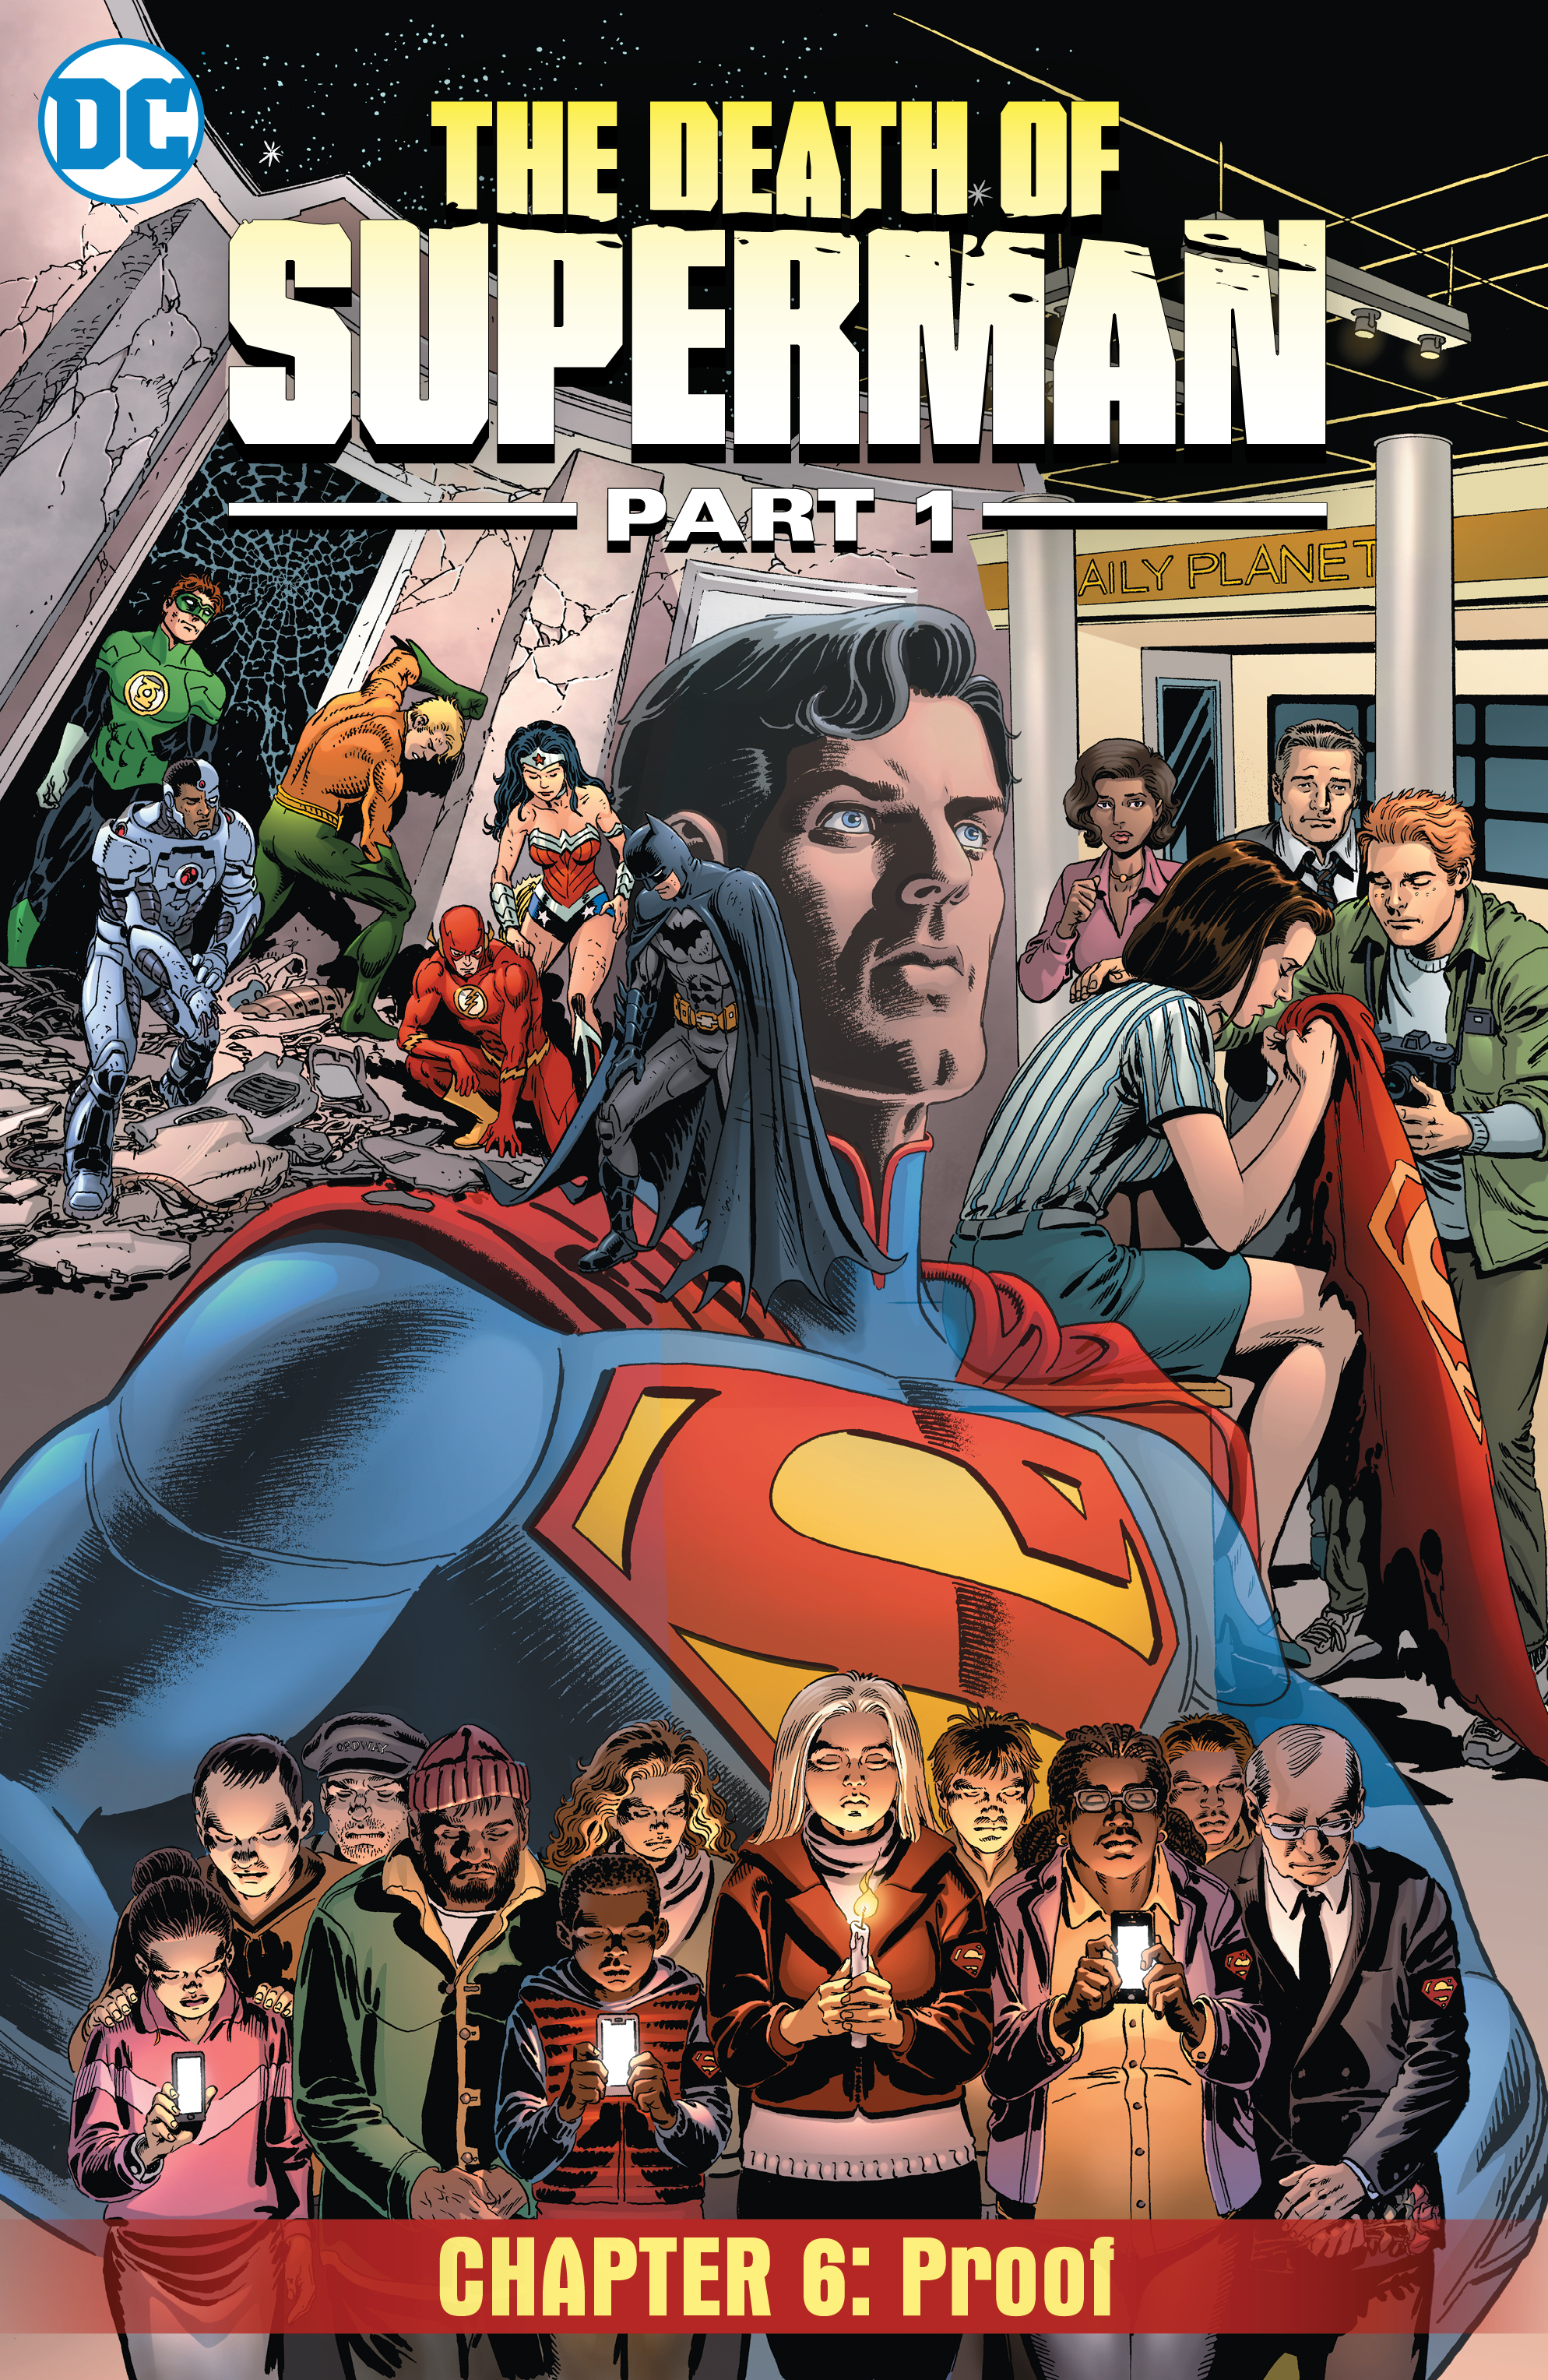 Death of Superman, Part 1 #6 preview images